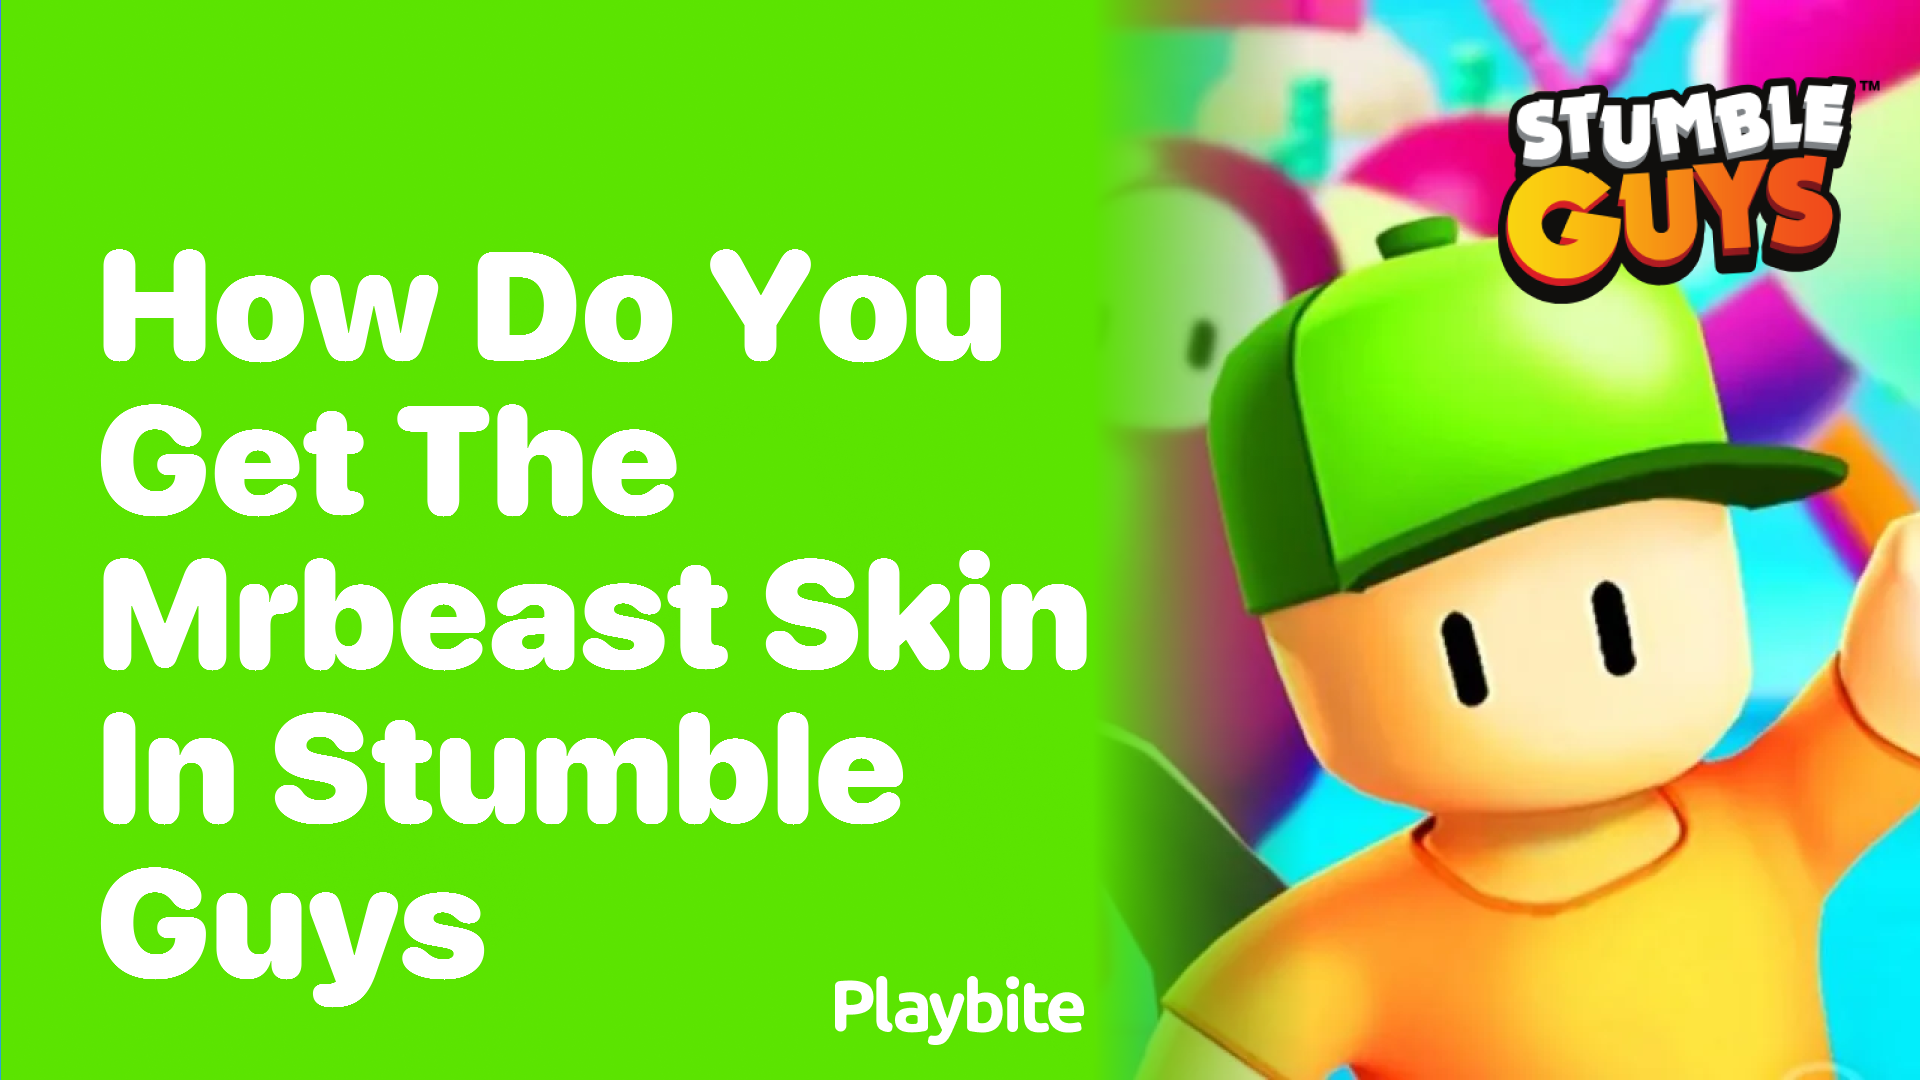 How Do You Get the MrBeast Skin in Stumble Guys?